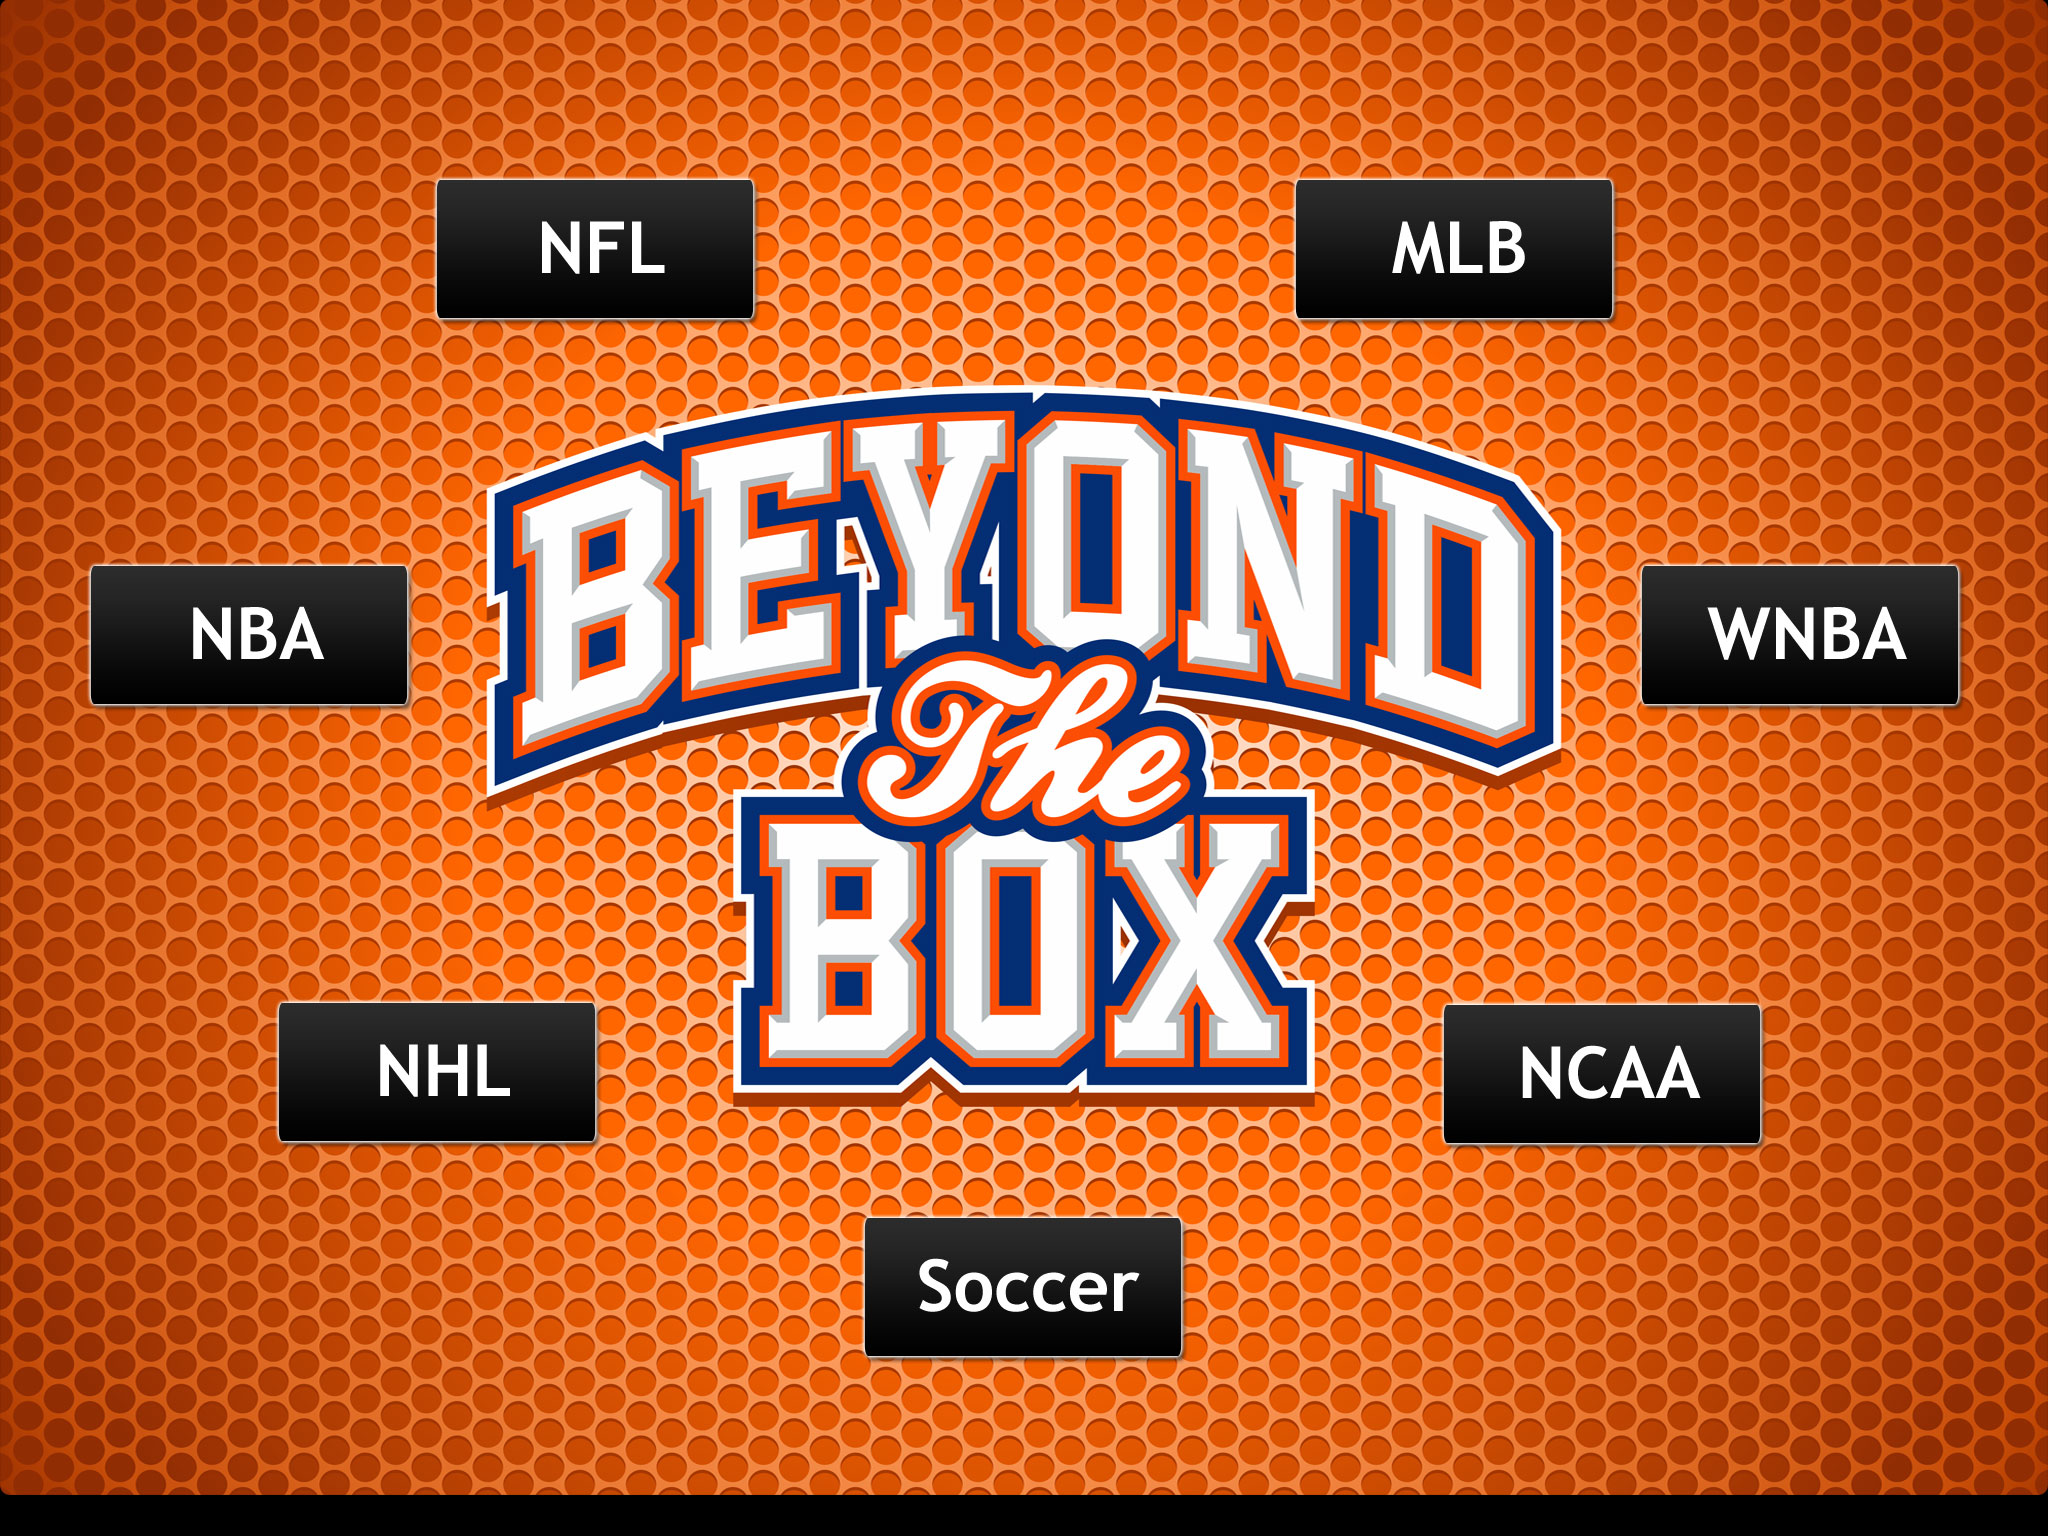 Beyond the Box 2.0 covers NFL, MLB, NBA, NHL, WNBA, Soccer, and NCAA